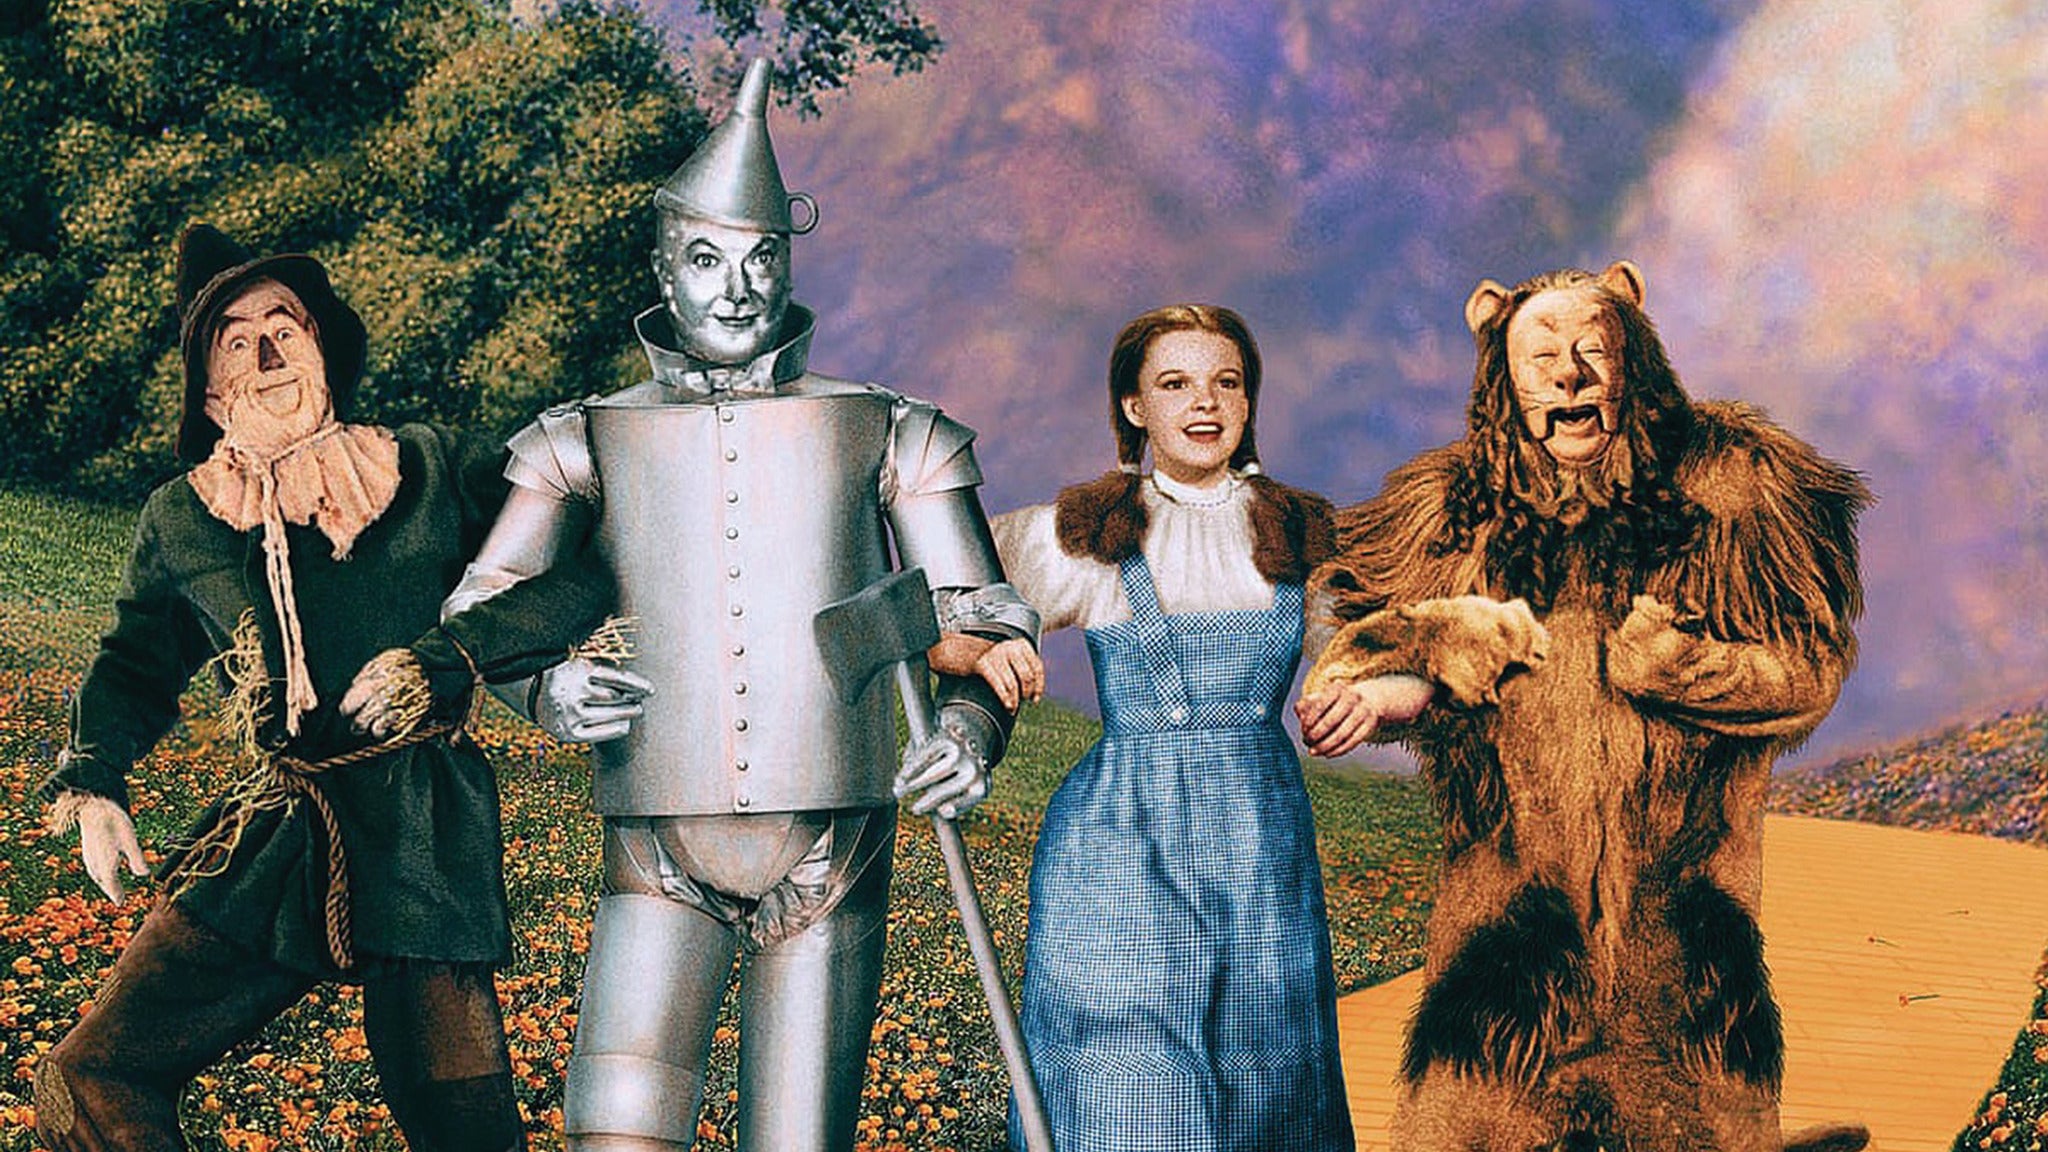 Wizard of Oz in Lafayette promo photo for IAE presale offer code